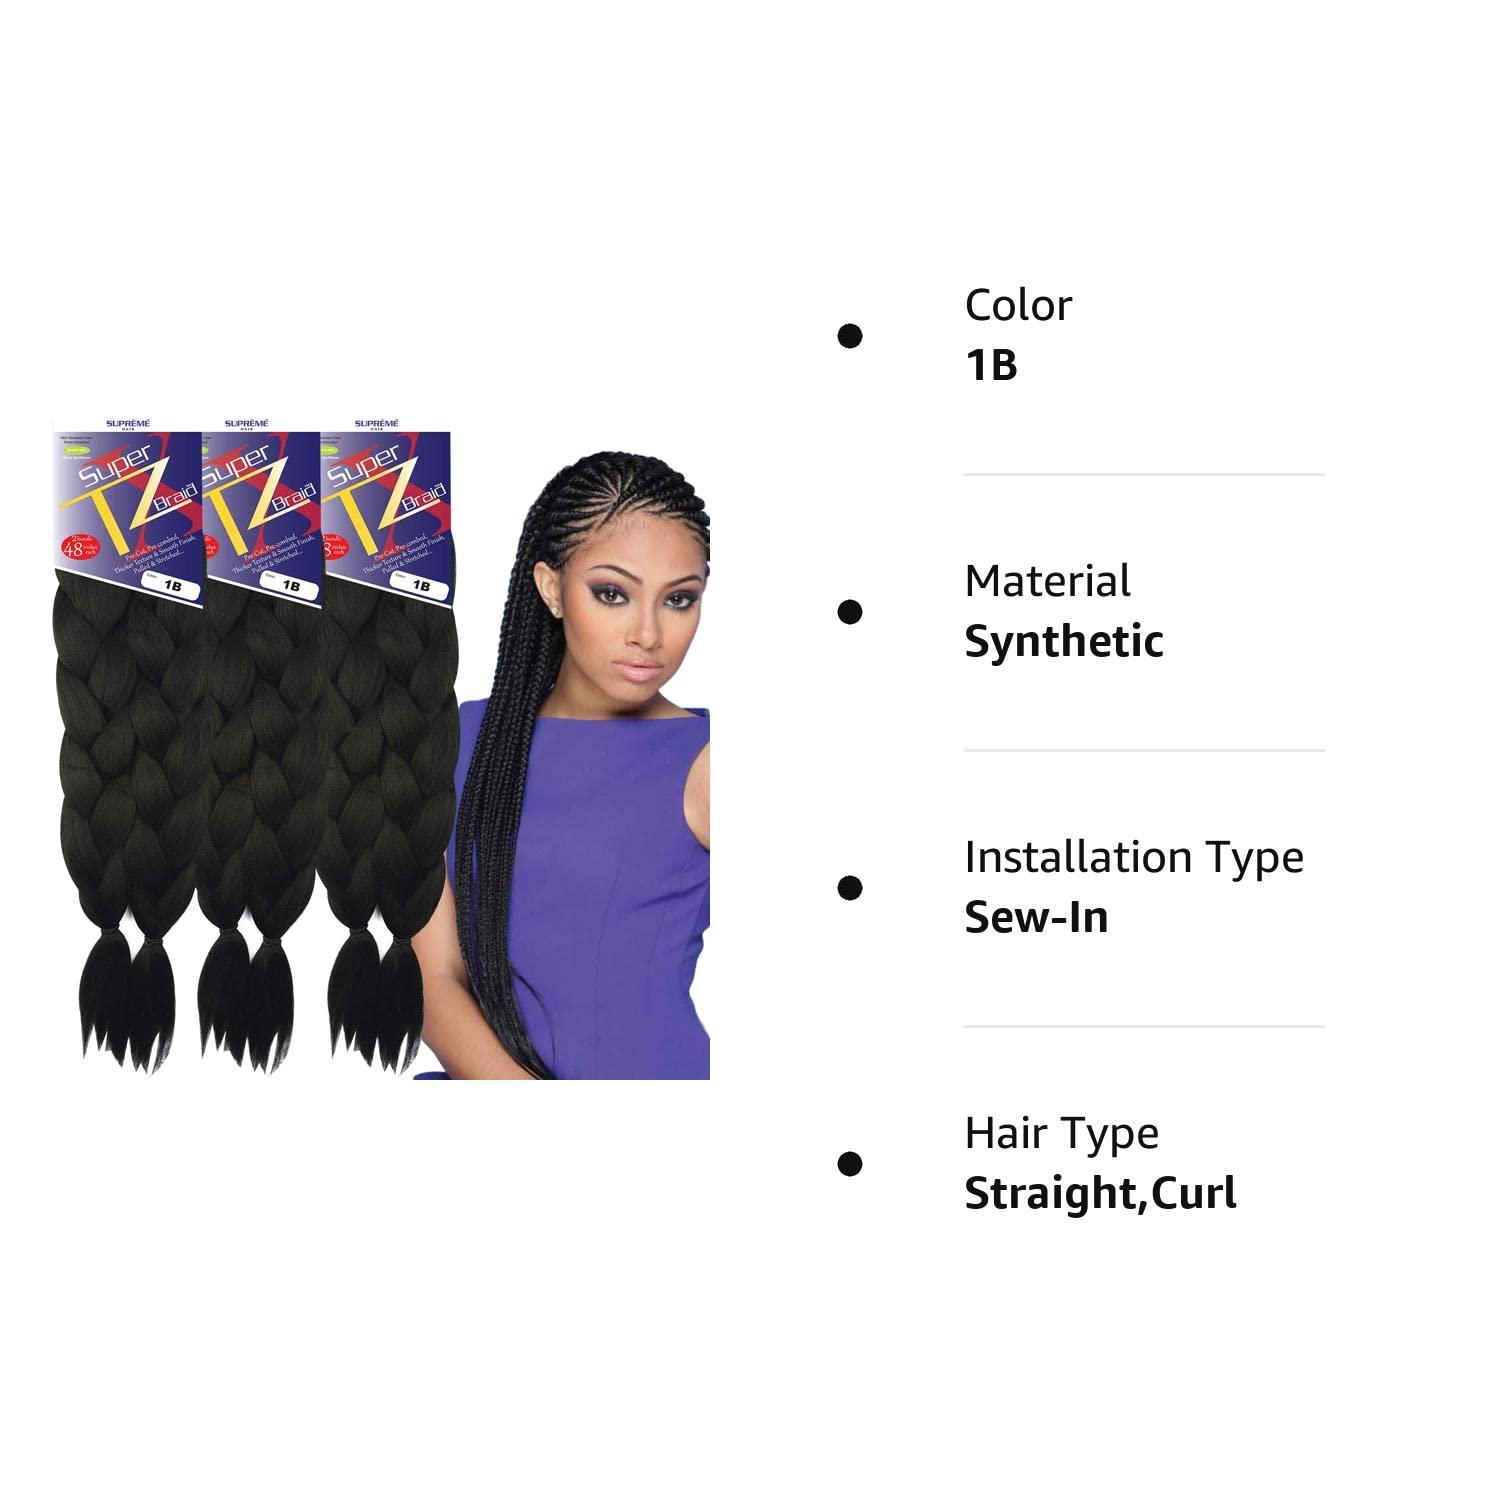 Spectra EZ Braid Pre-Stretched Braiding Hair Value Pack - 3 Bundles